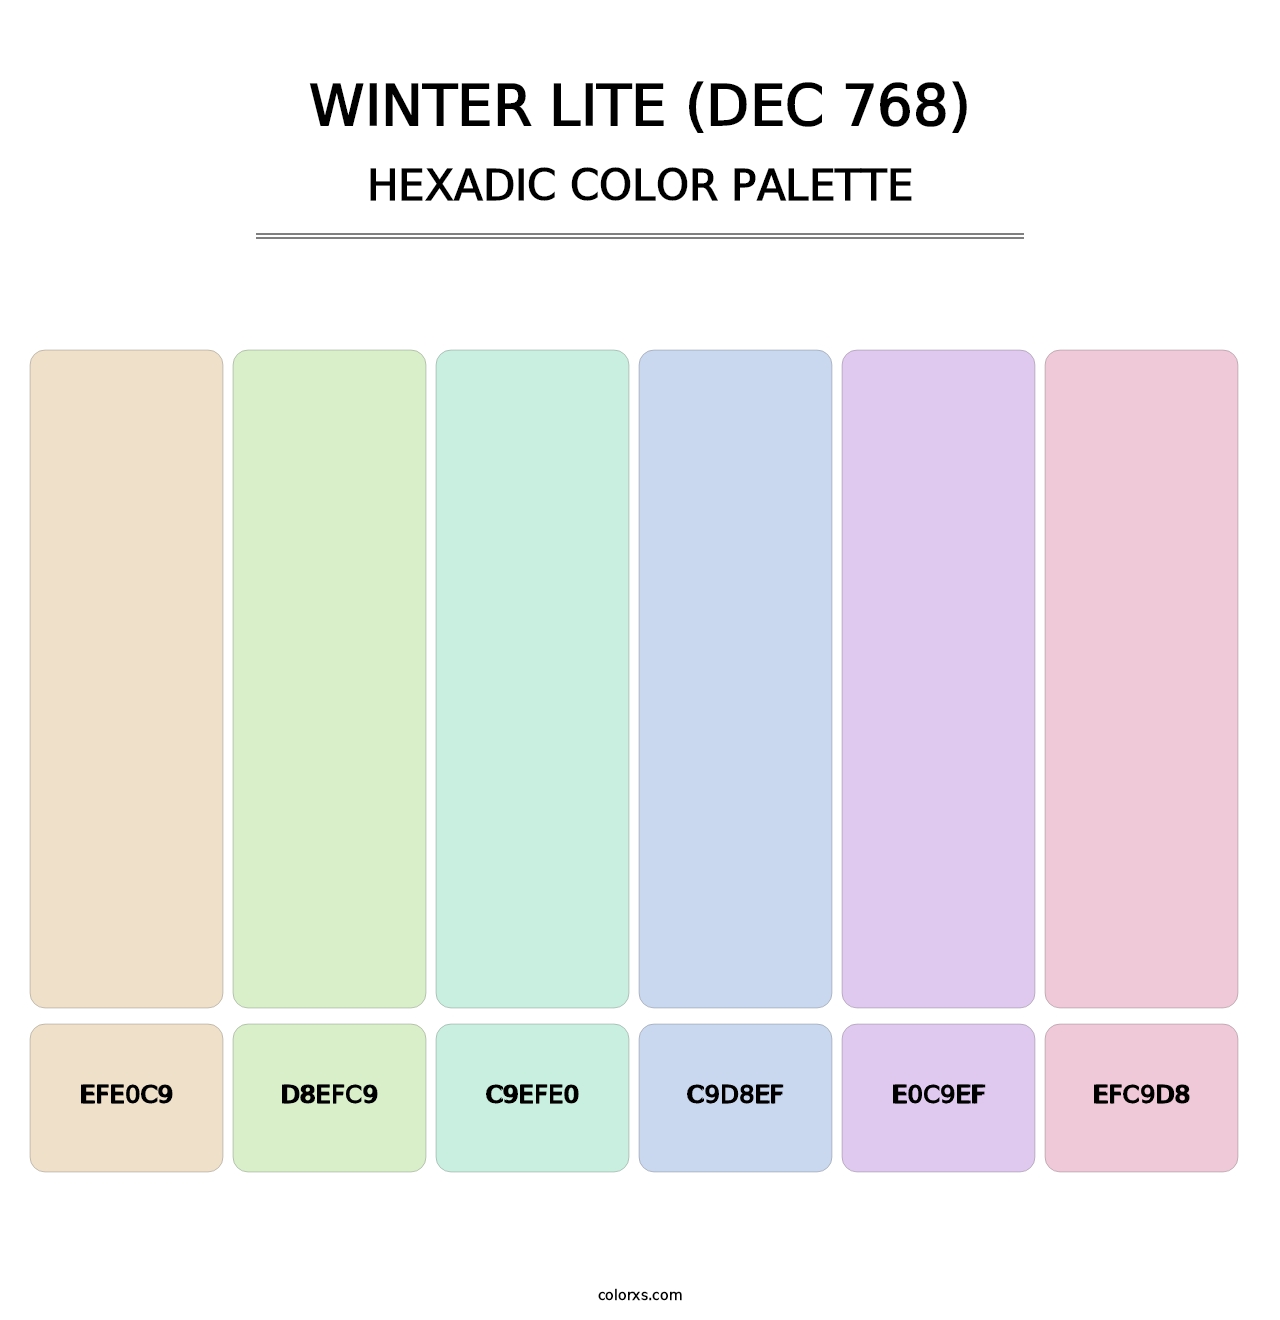 Winter Lite (DEC 768) - Hexadic Color Palette